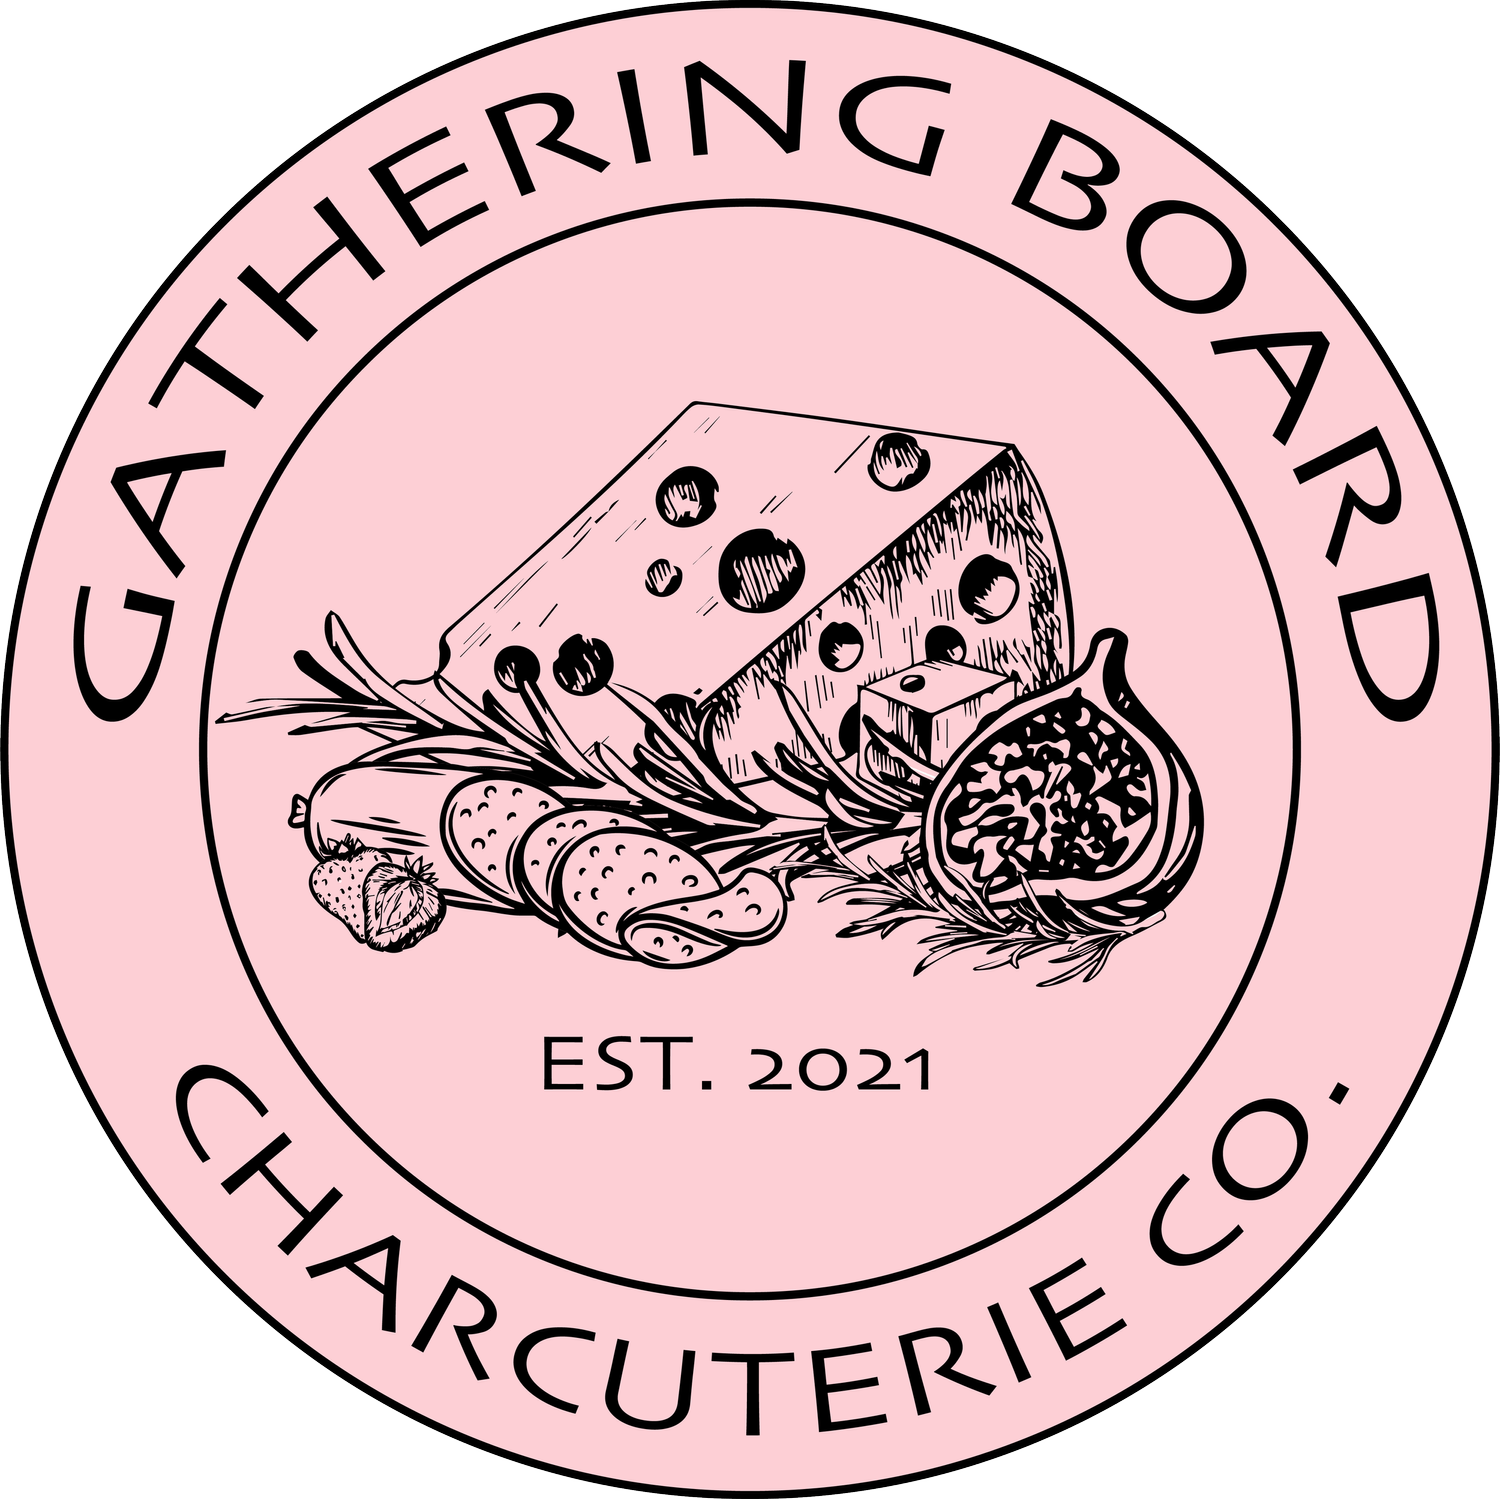 Gathering Board